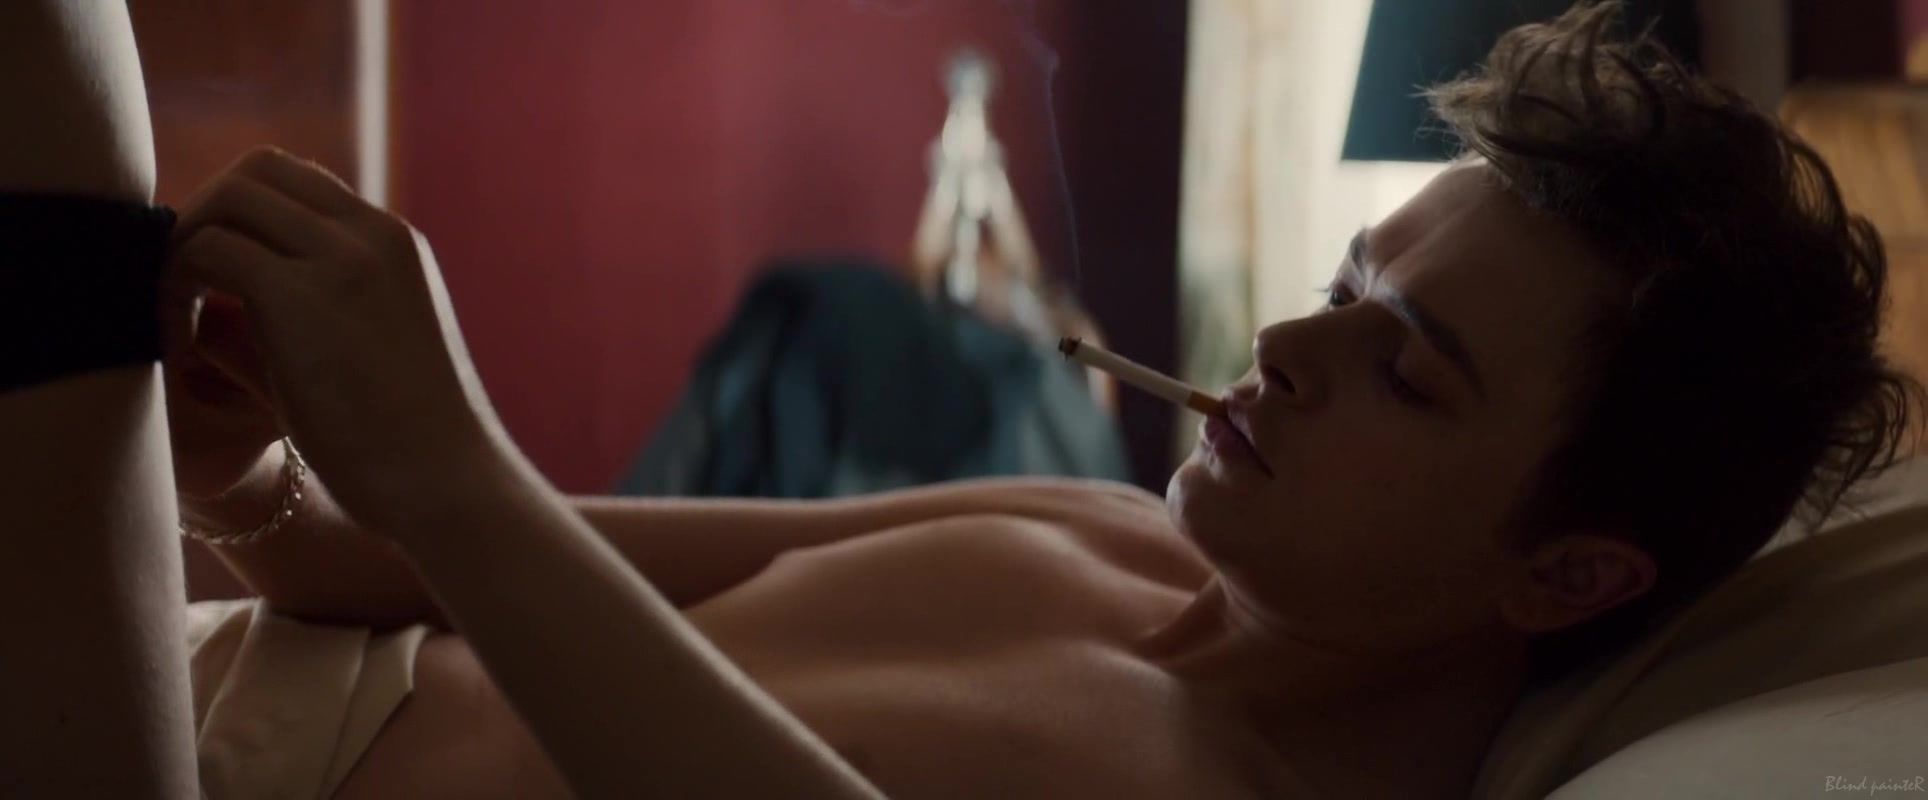 Fisting Sex video Alessandra Mastronardi nude - Life (2015) BadJoJo - 1